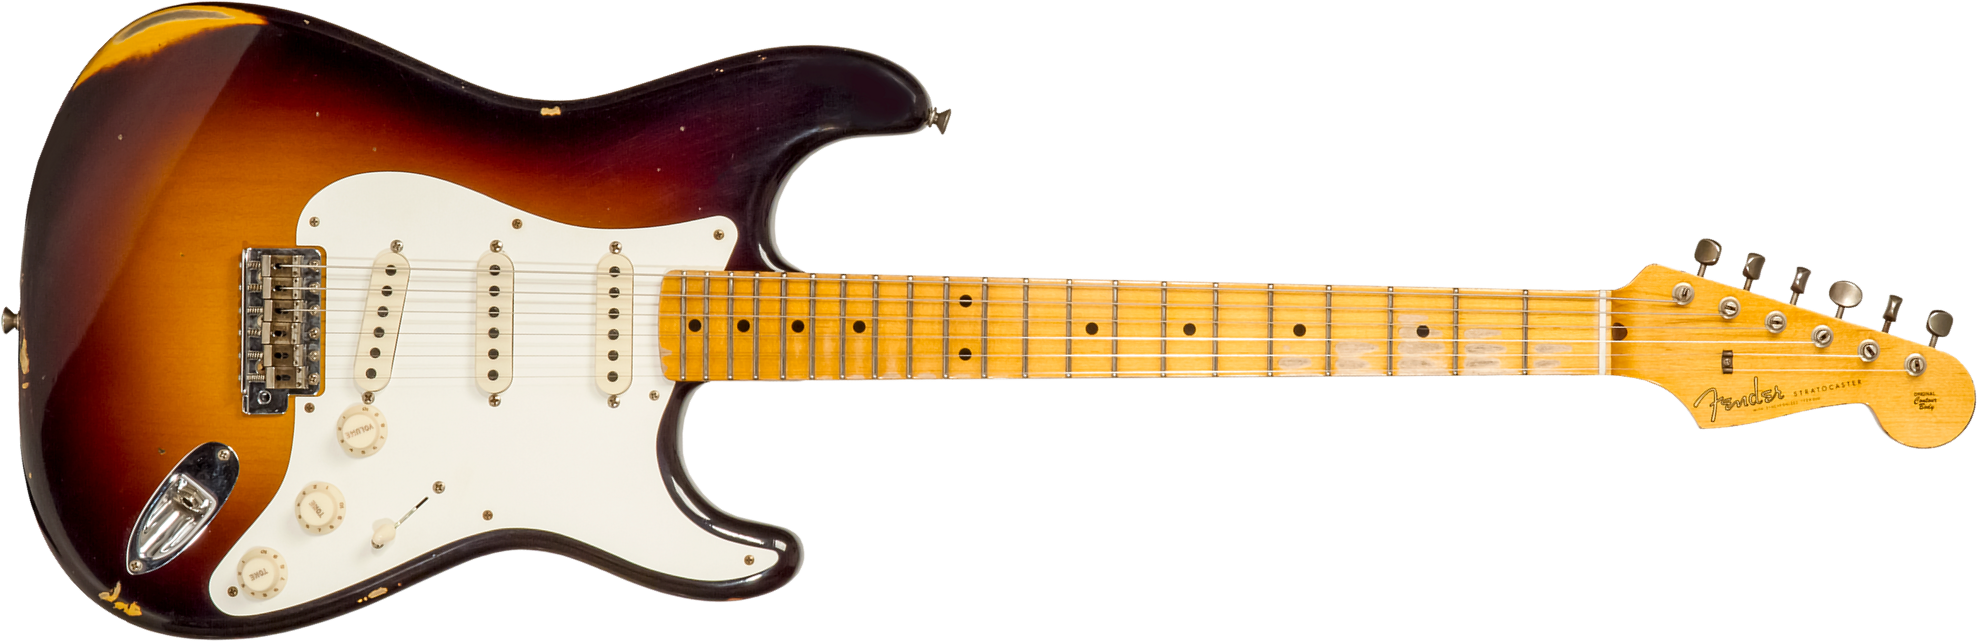 Fender Custom Shop Strat 1957 3s Trem Mn #cz571791 - Relic Wide Fade 2-color Sunburst - E-Gitarre in Str-Form - Main picture